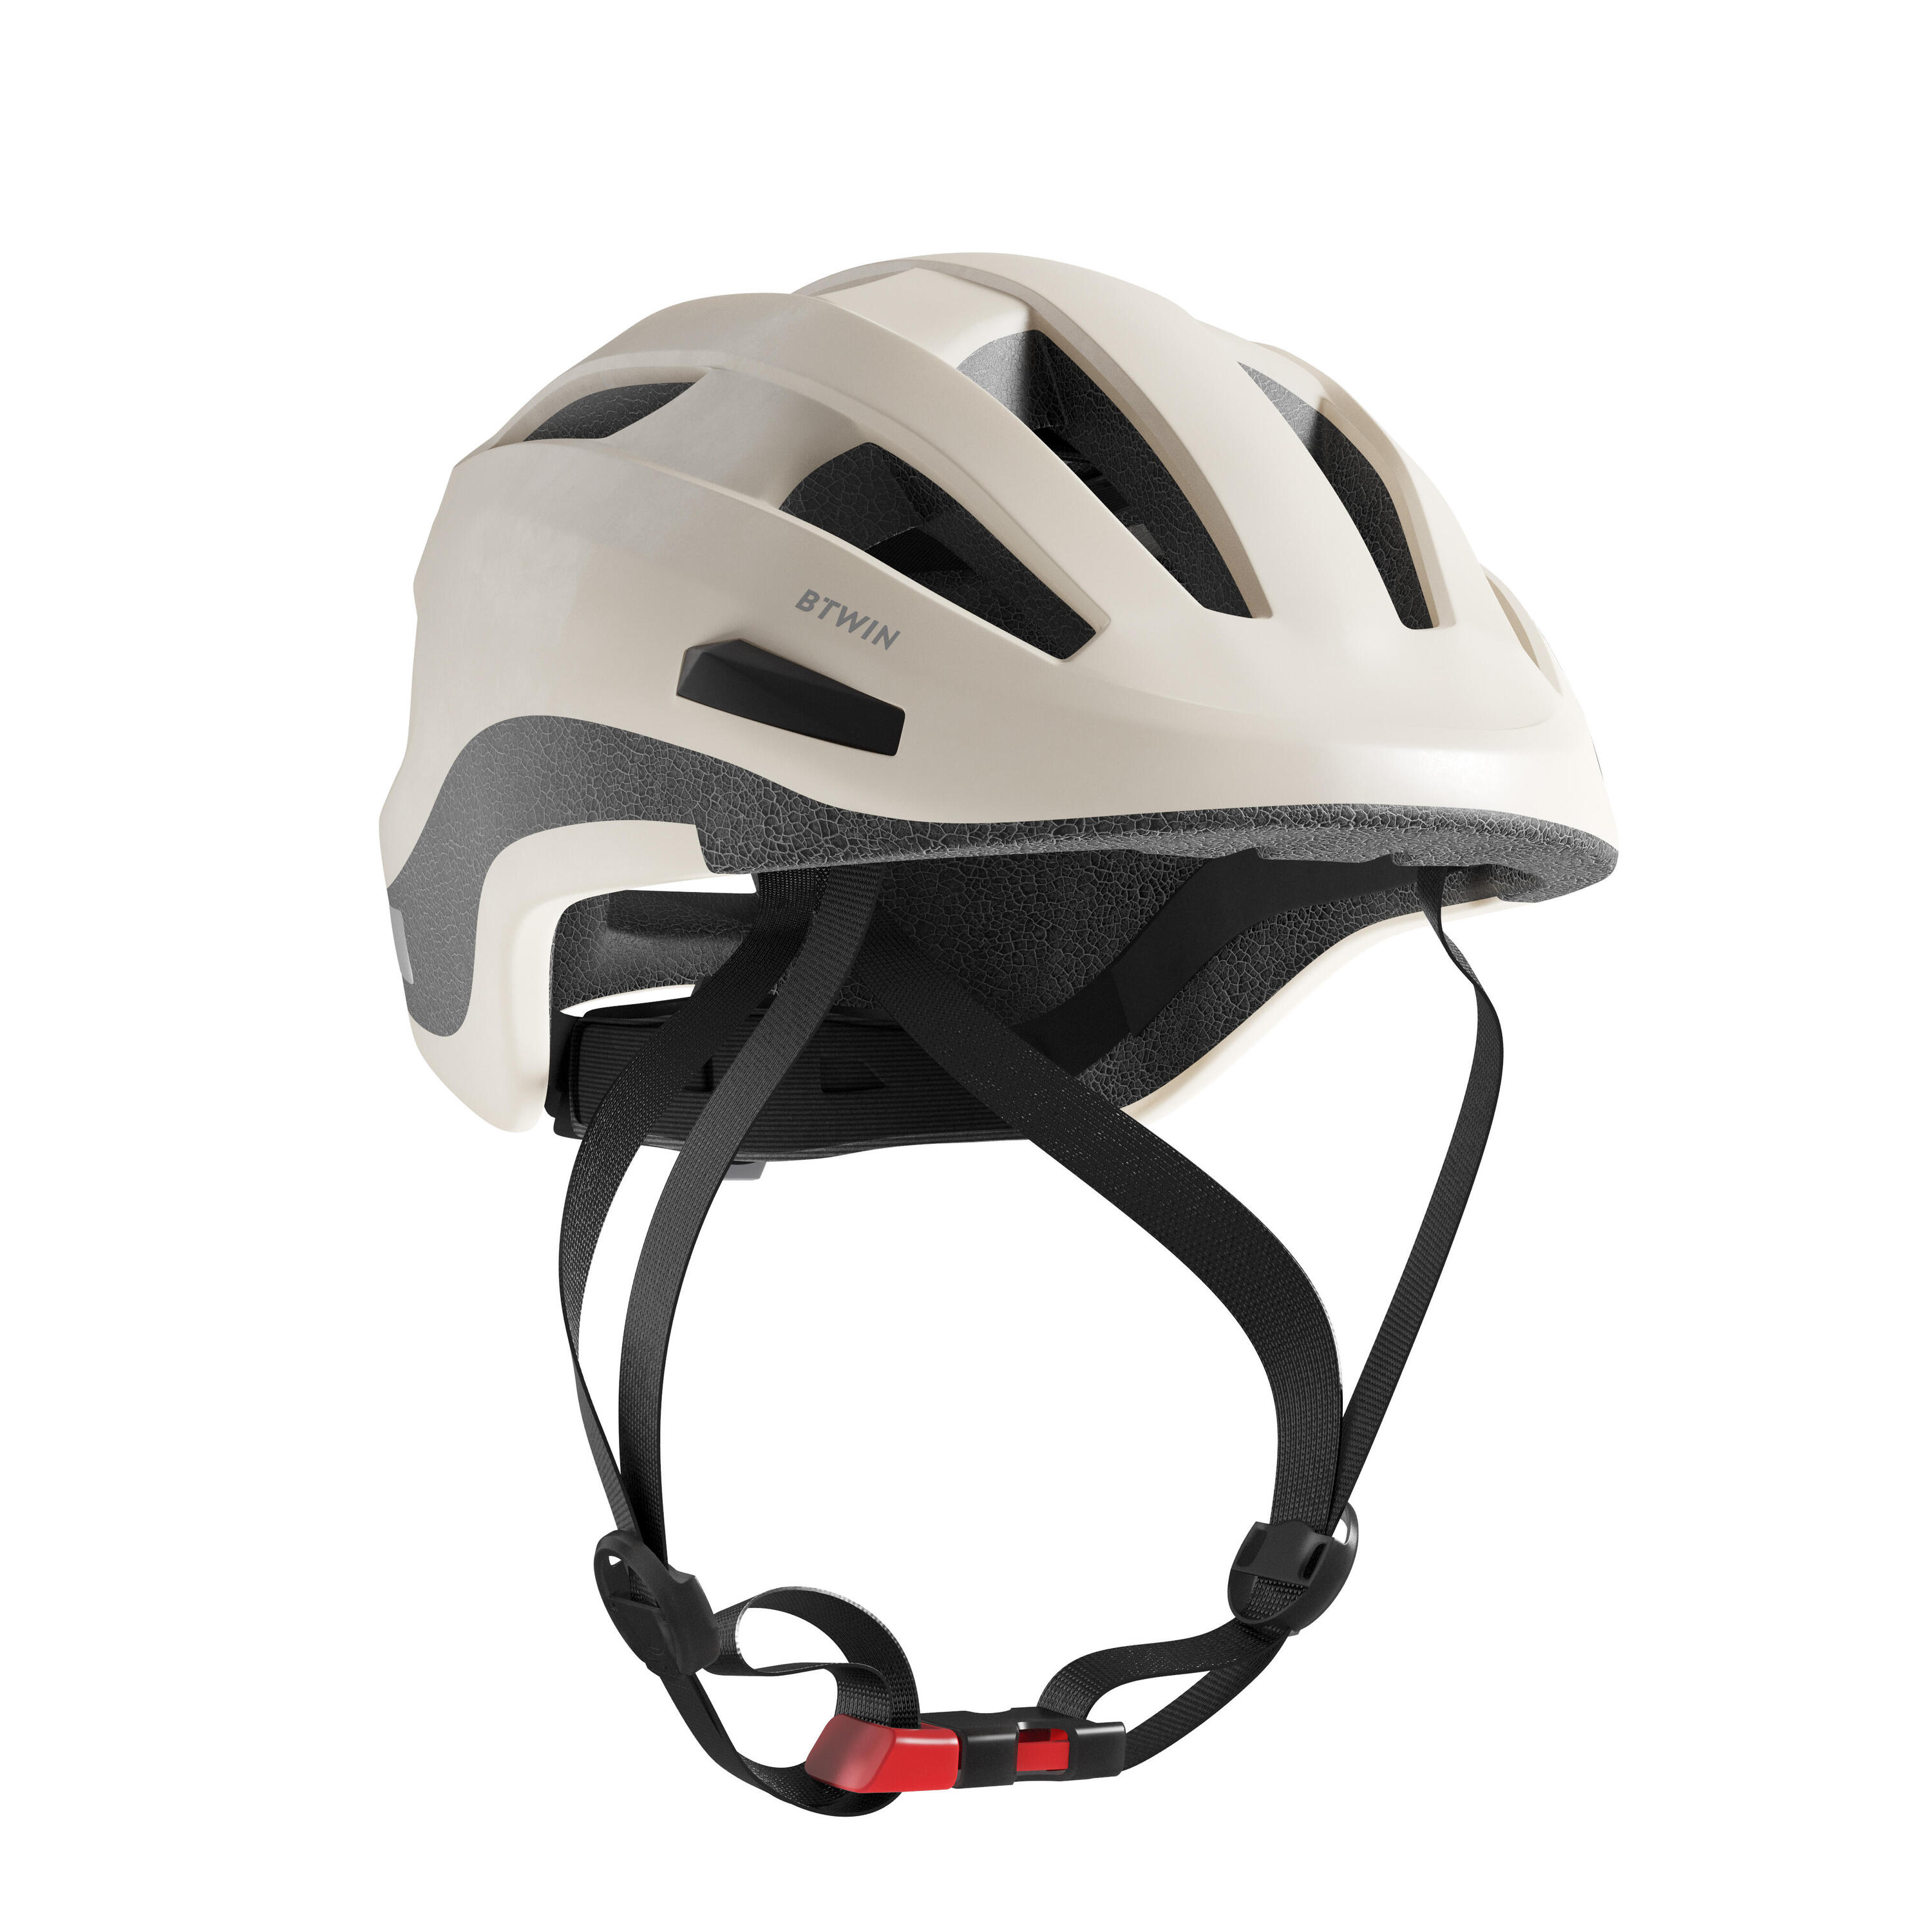 City Cycling Helmet 500 - Beige 5/6